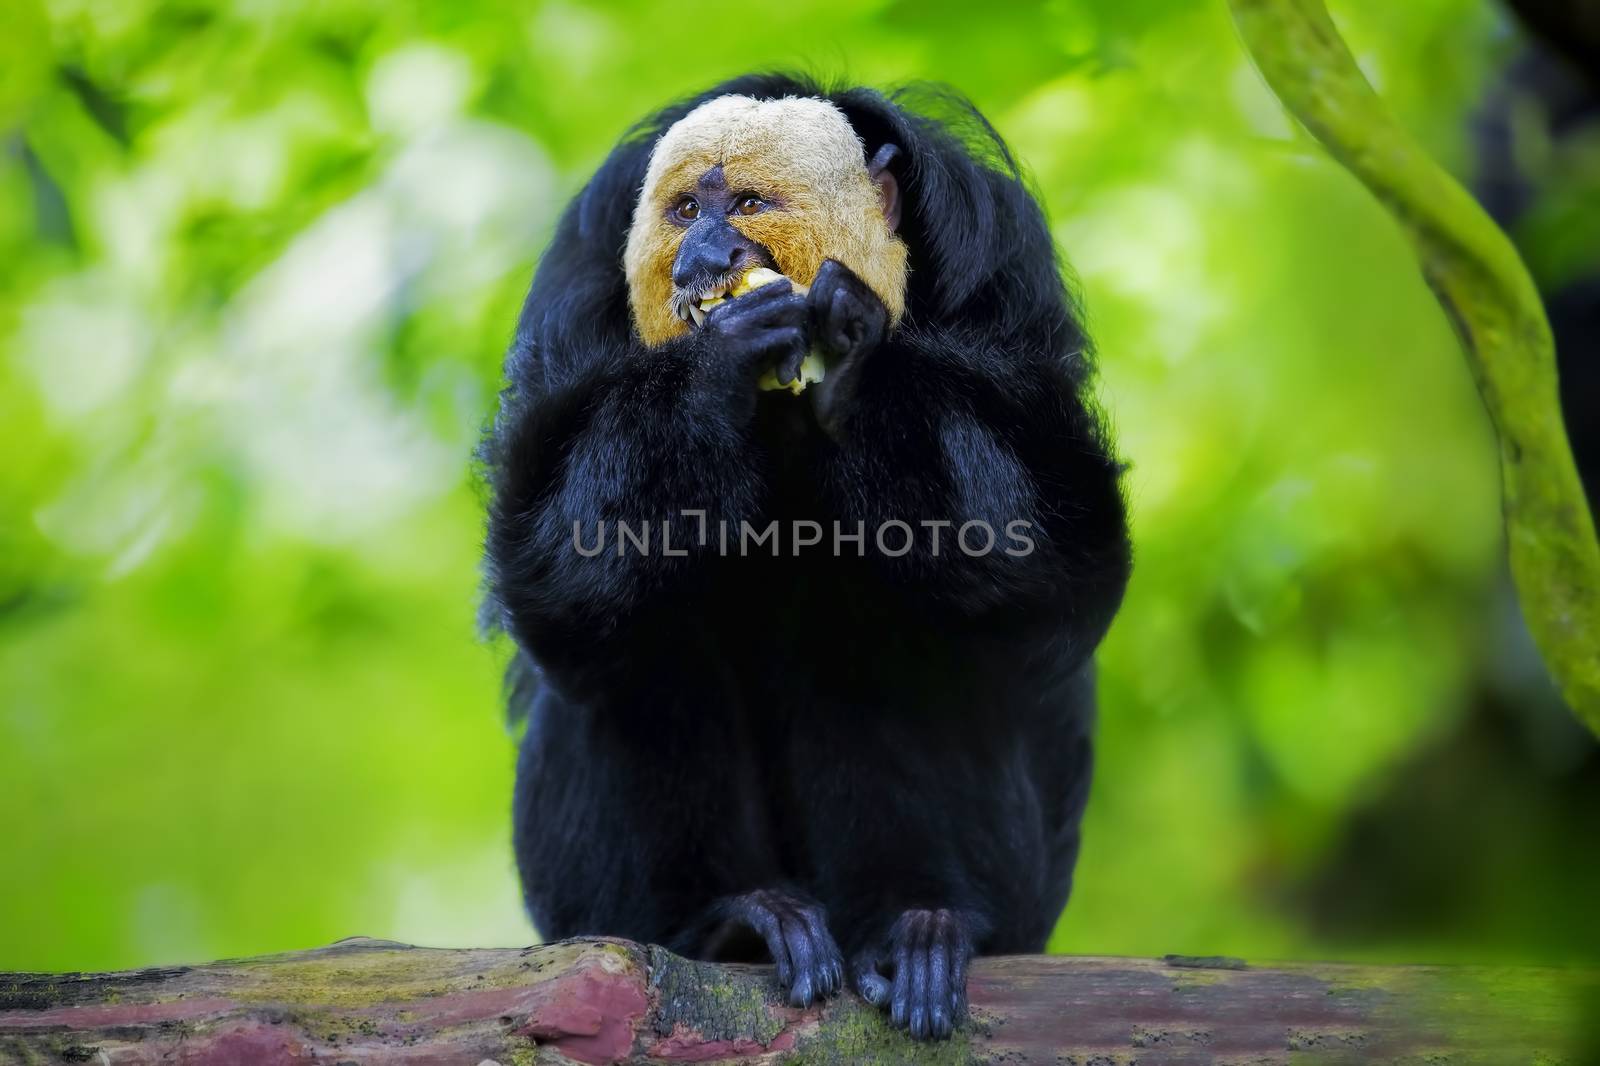 White-faced Saki Monkey sitting in the treetops